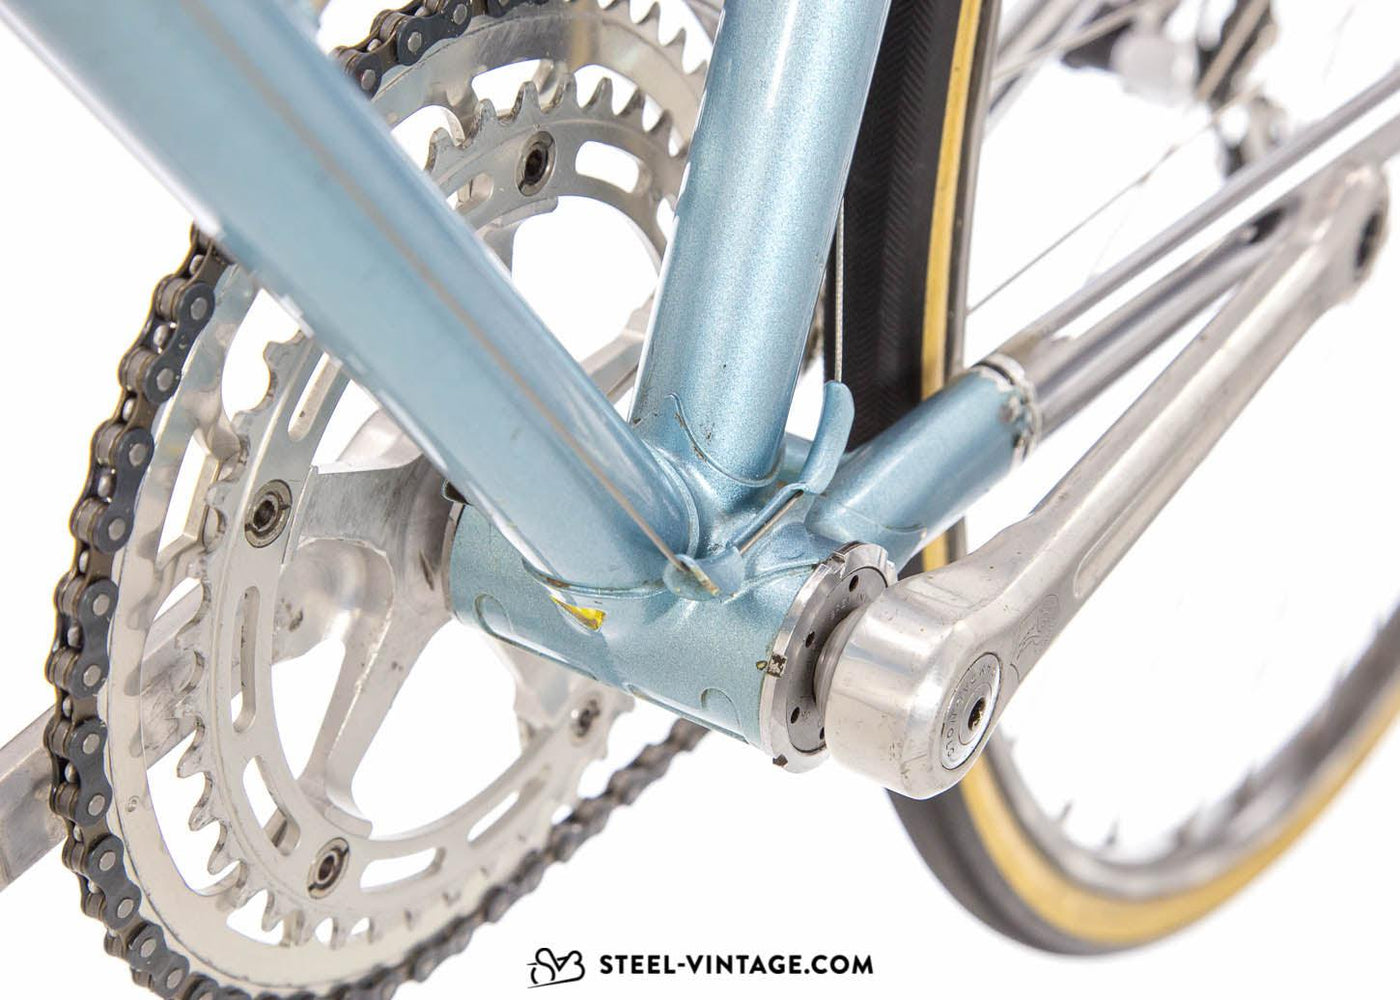 NOS Eddy Merckx Professional 1981 Classic Road Bike - Steel Vintage Bikes